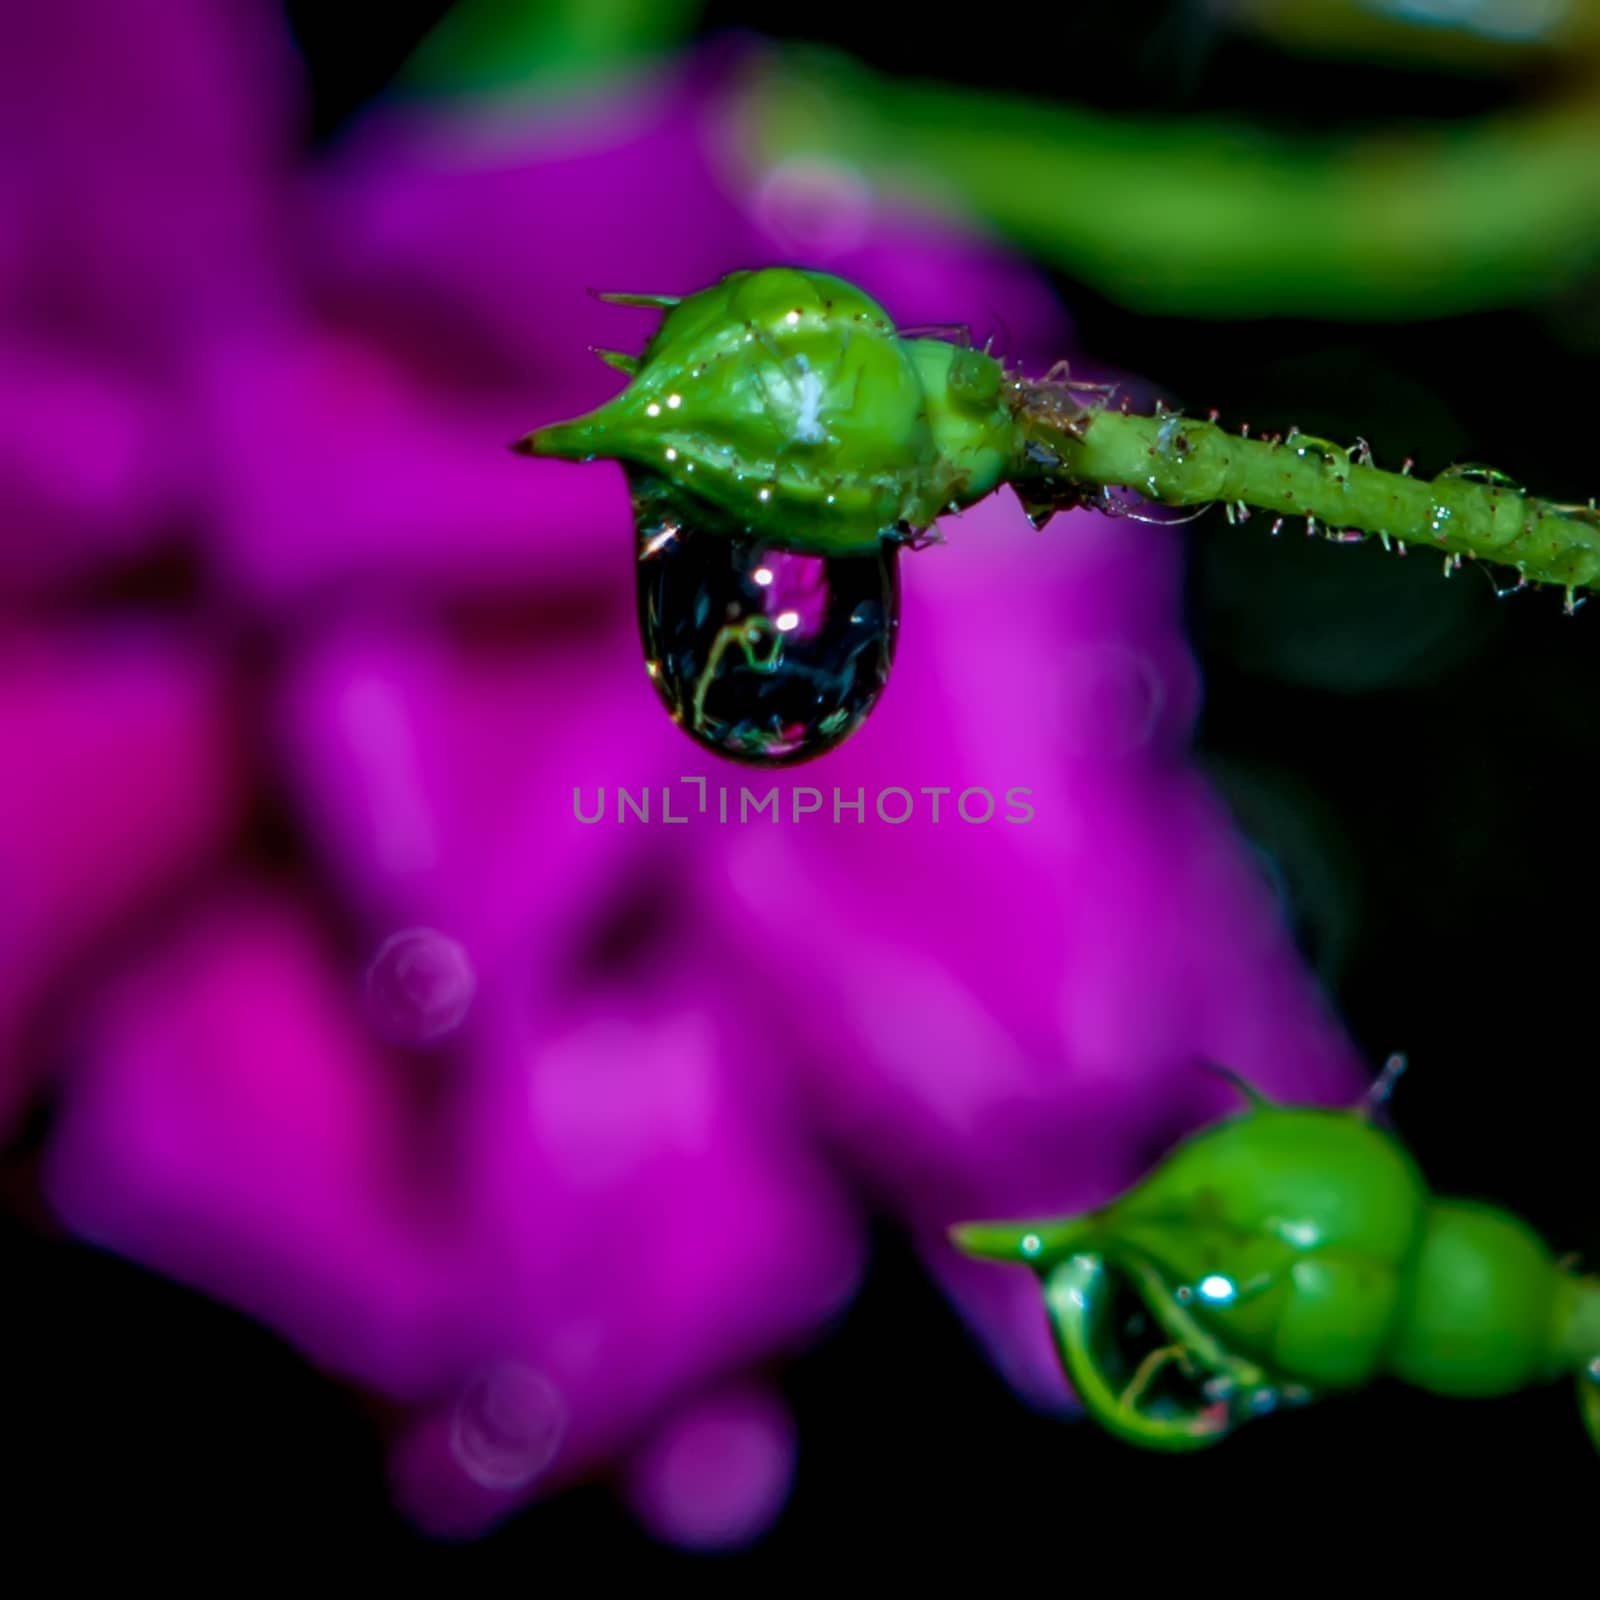 rose bud after rain by digidreamgrafix